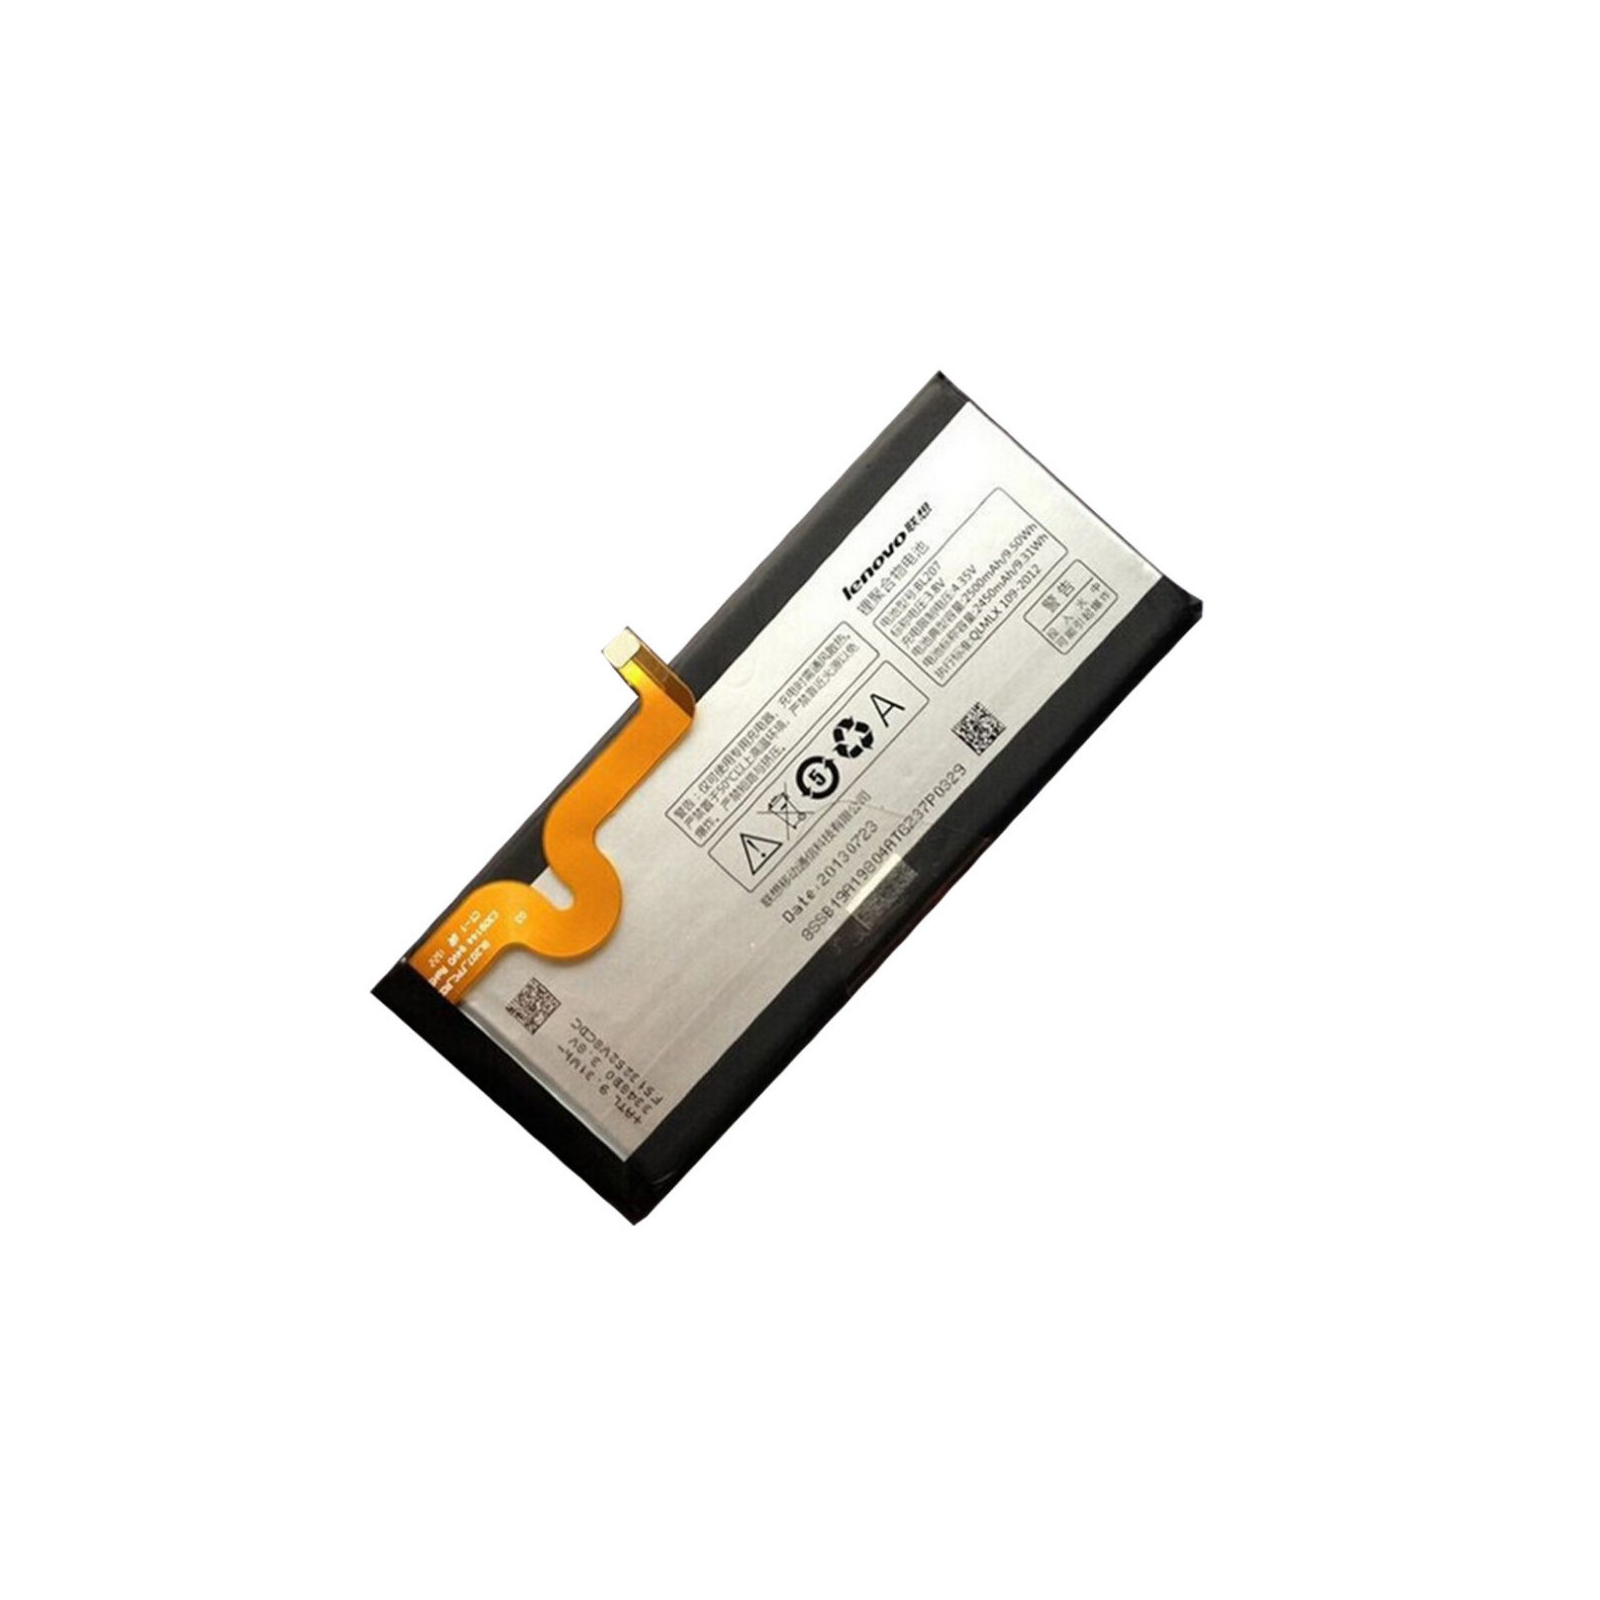 Аккумуляторная батарея Lenovo for K900 (BL-207 / 37261)